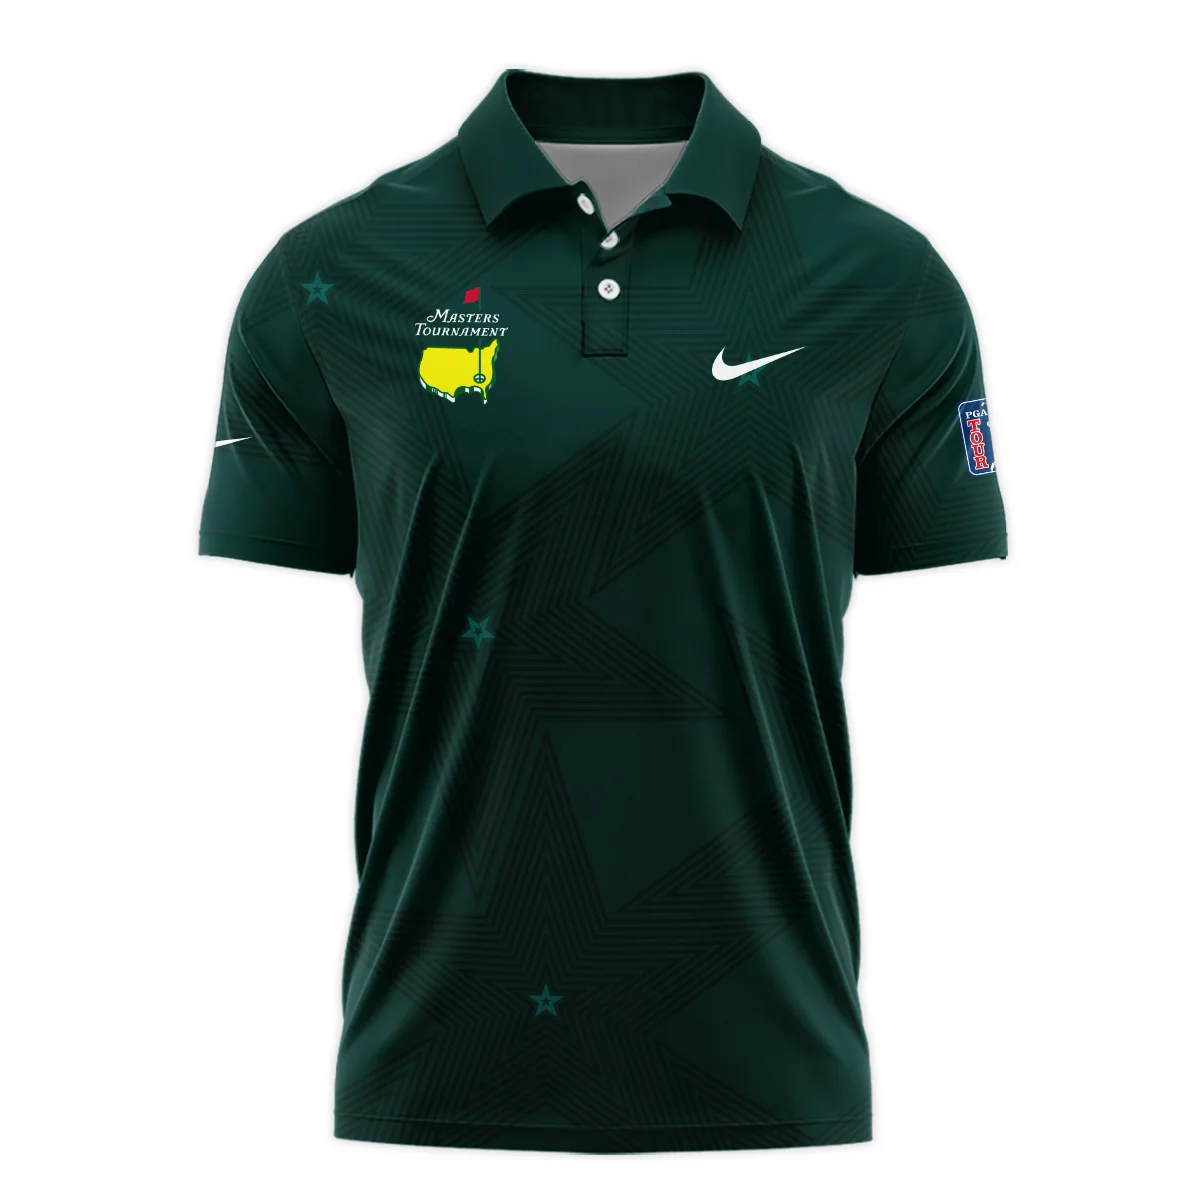 Golf Pattern Stars Dark Green Masters Tournament Nike Zipper Hoodie Shirt Style Classic Zipper Hoodie Shirt